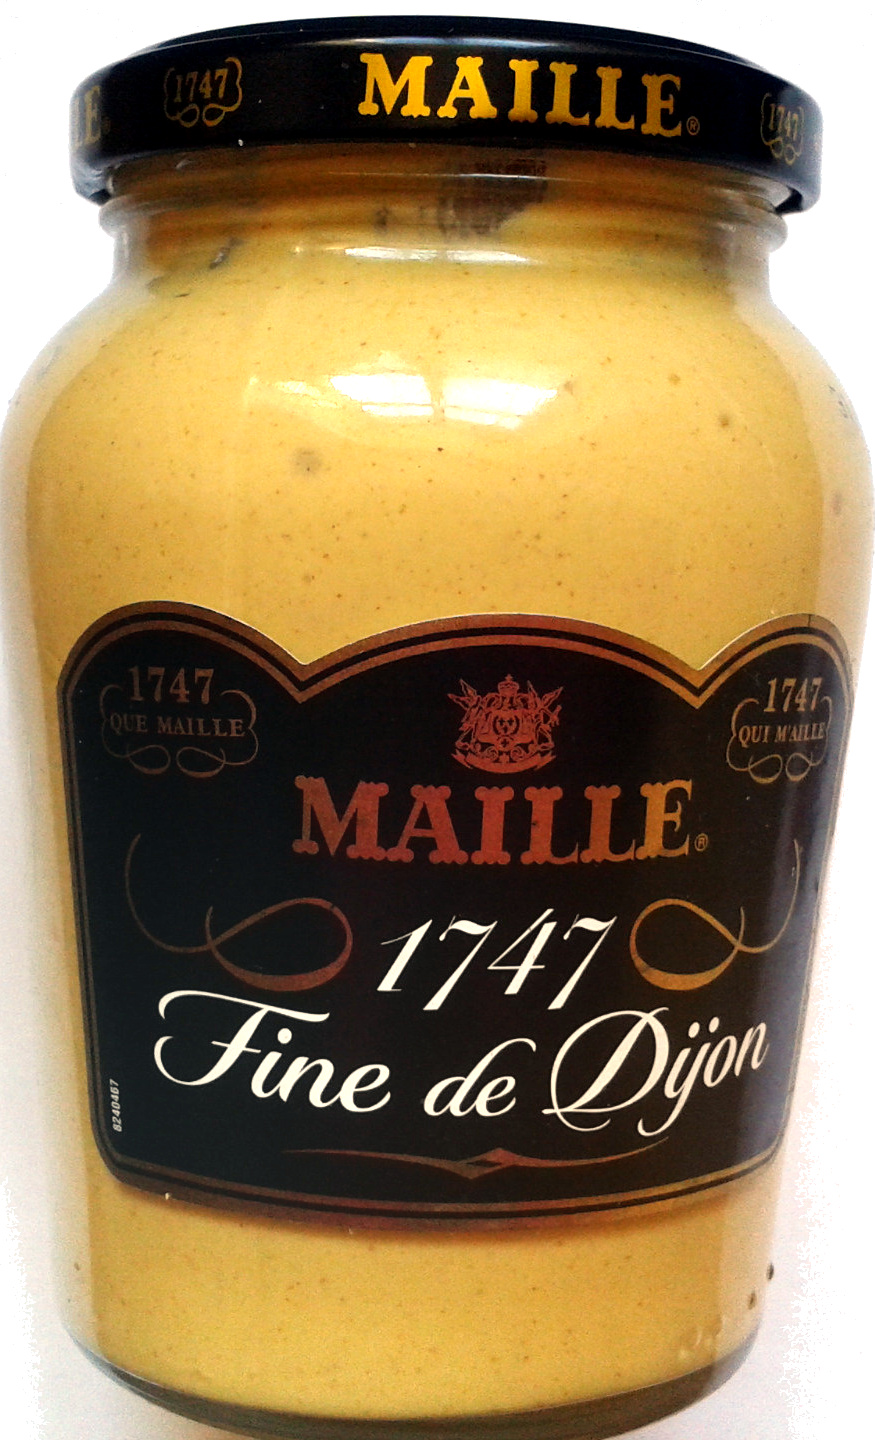 Moutarde fine de Dijon - Product - fr